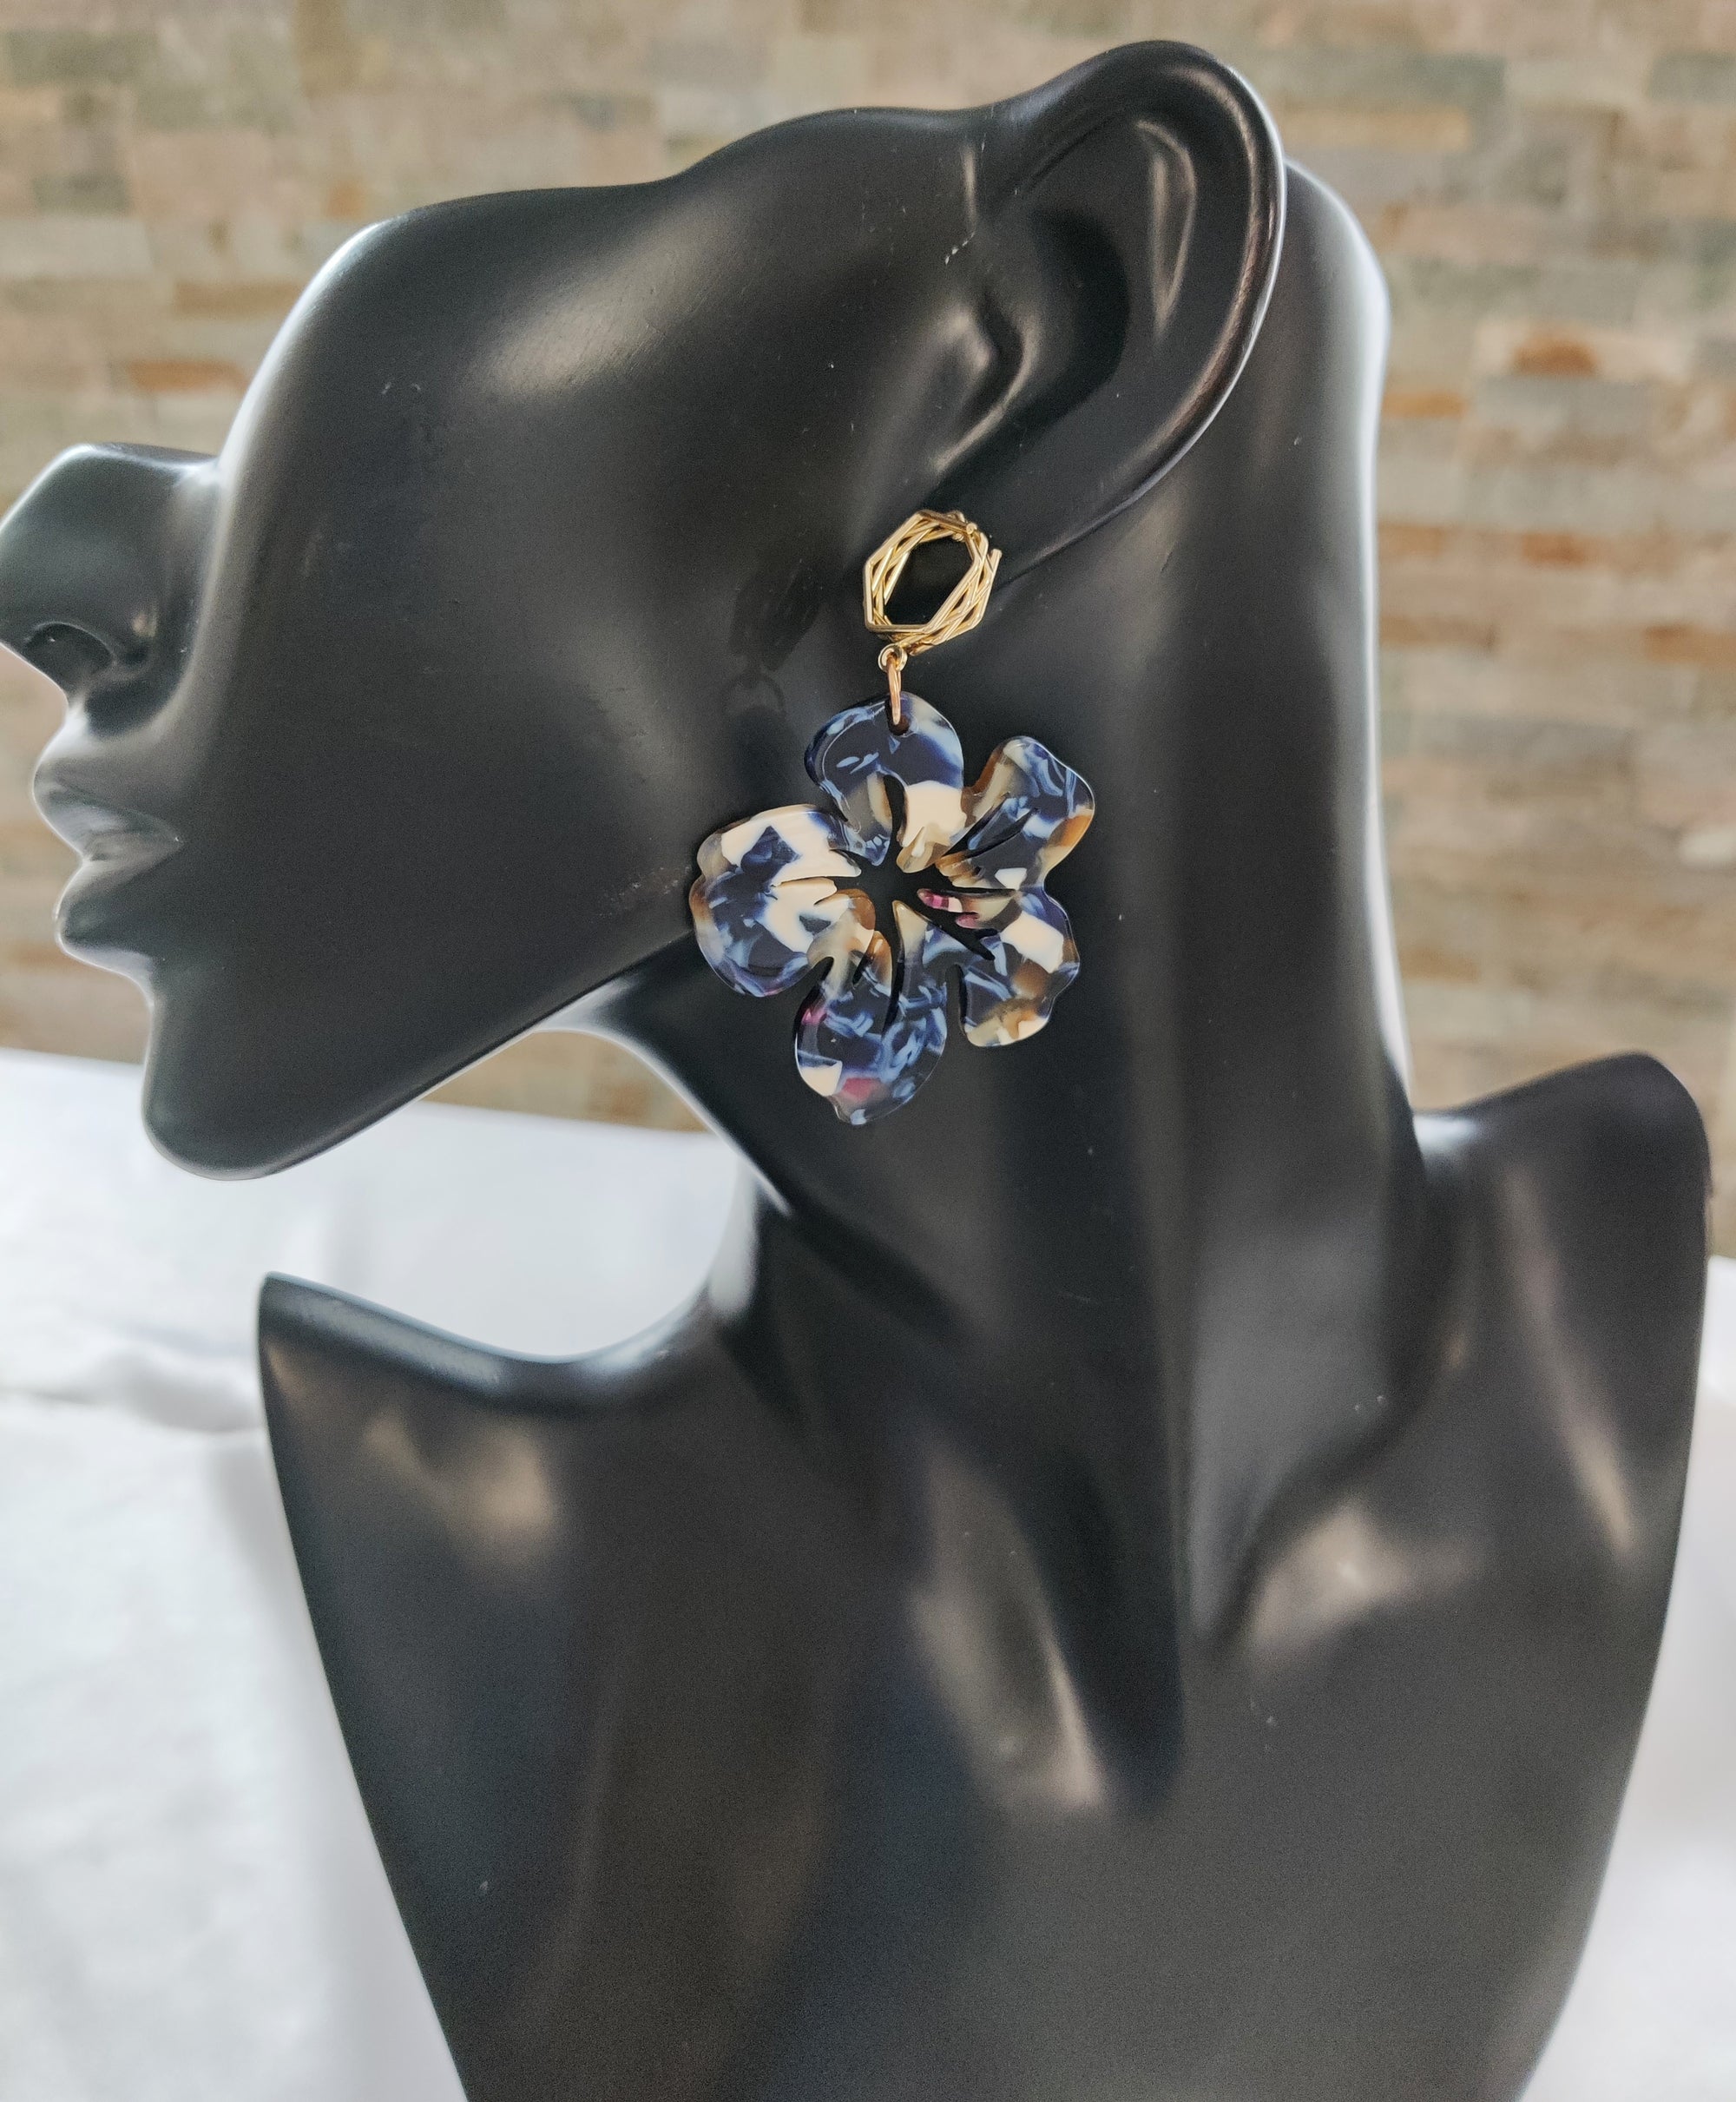 resin flower stud earrings